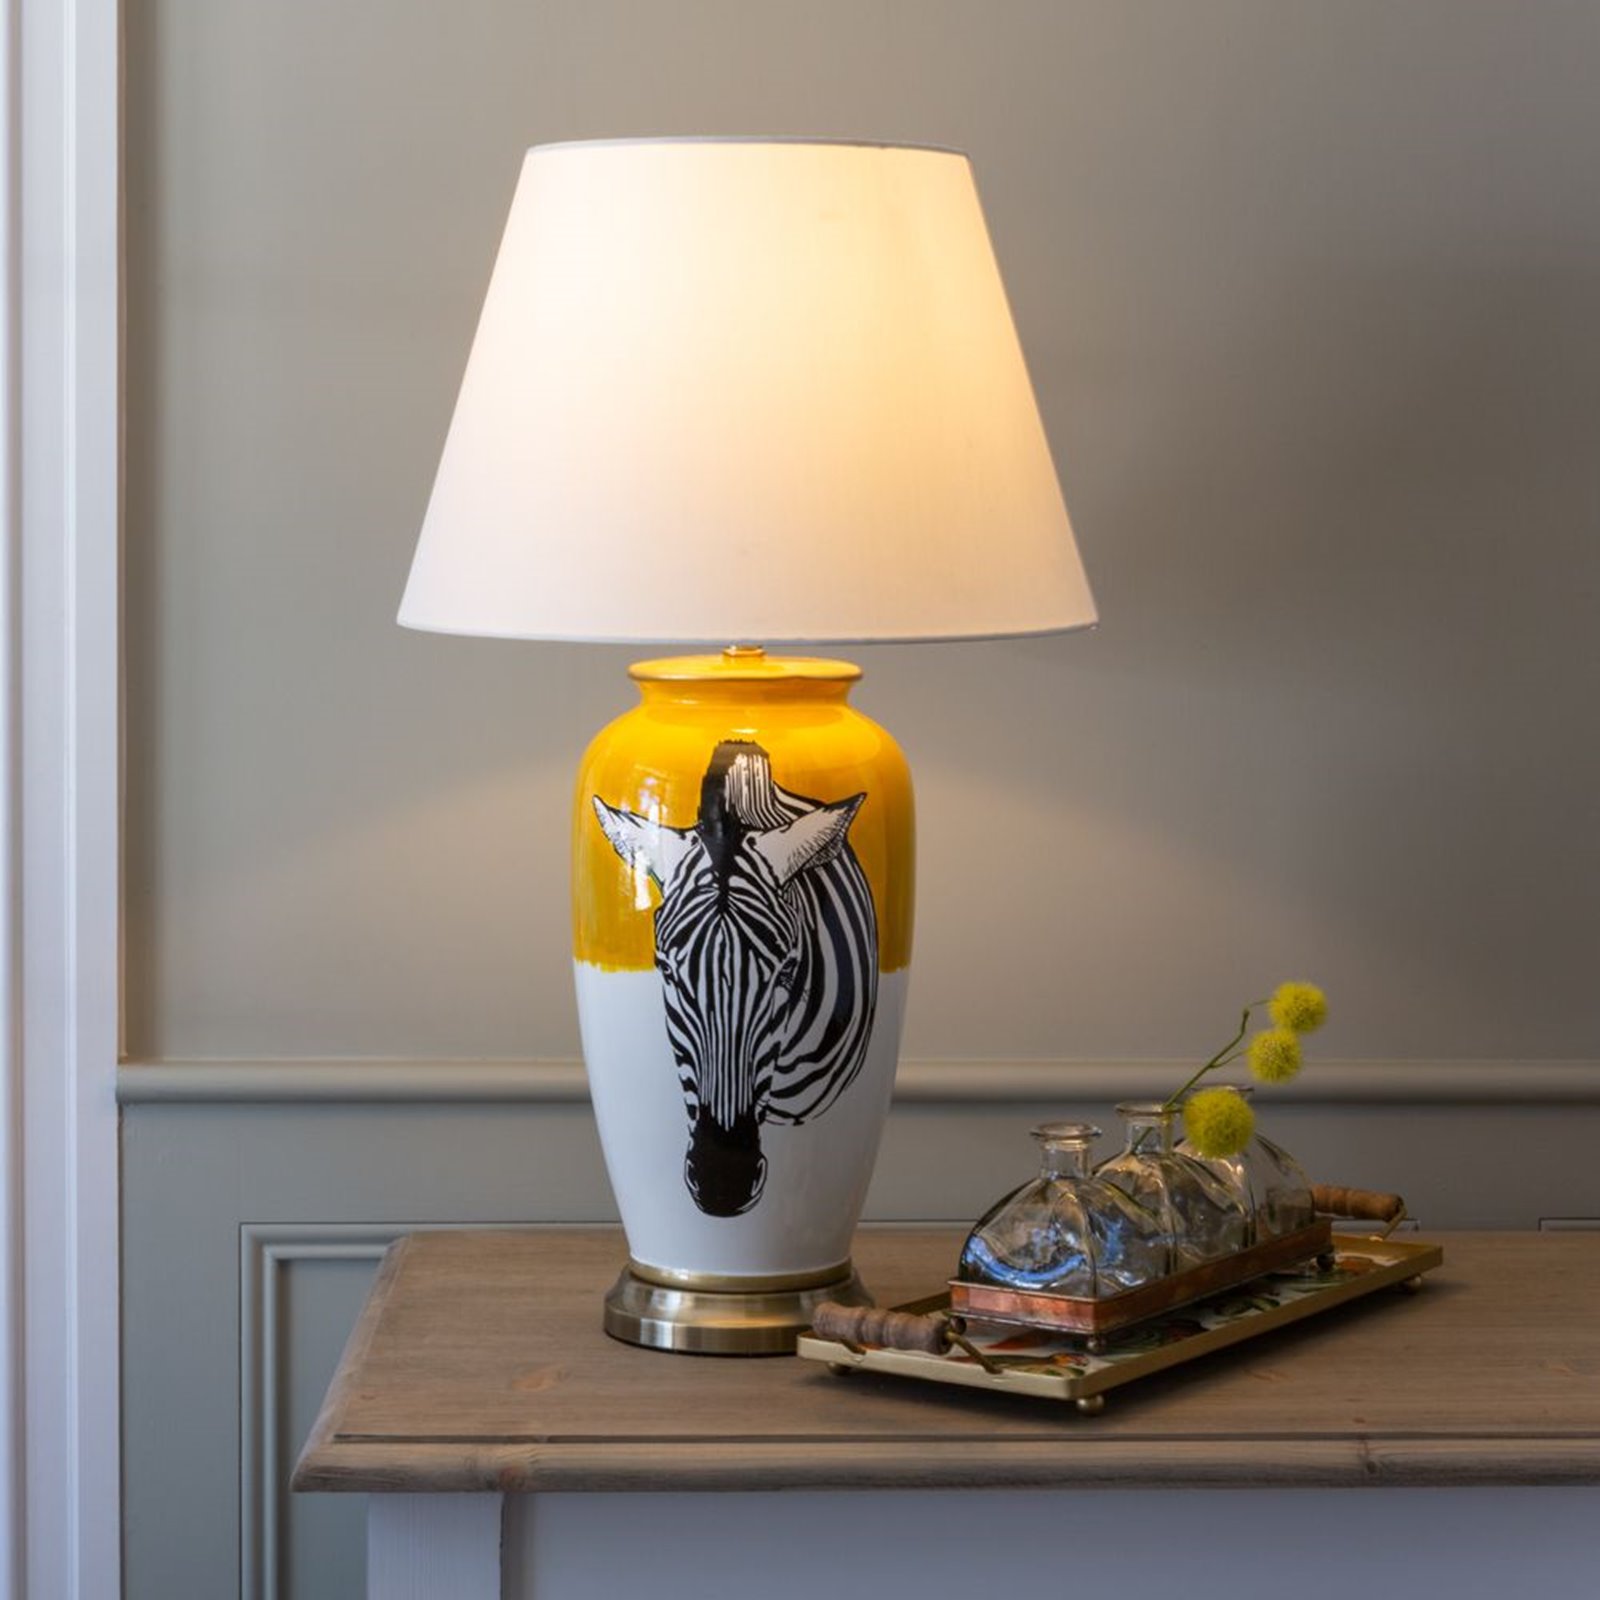 Zebra Lamp with Shade